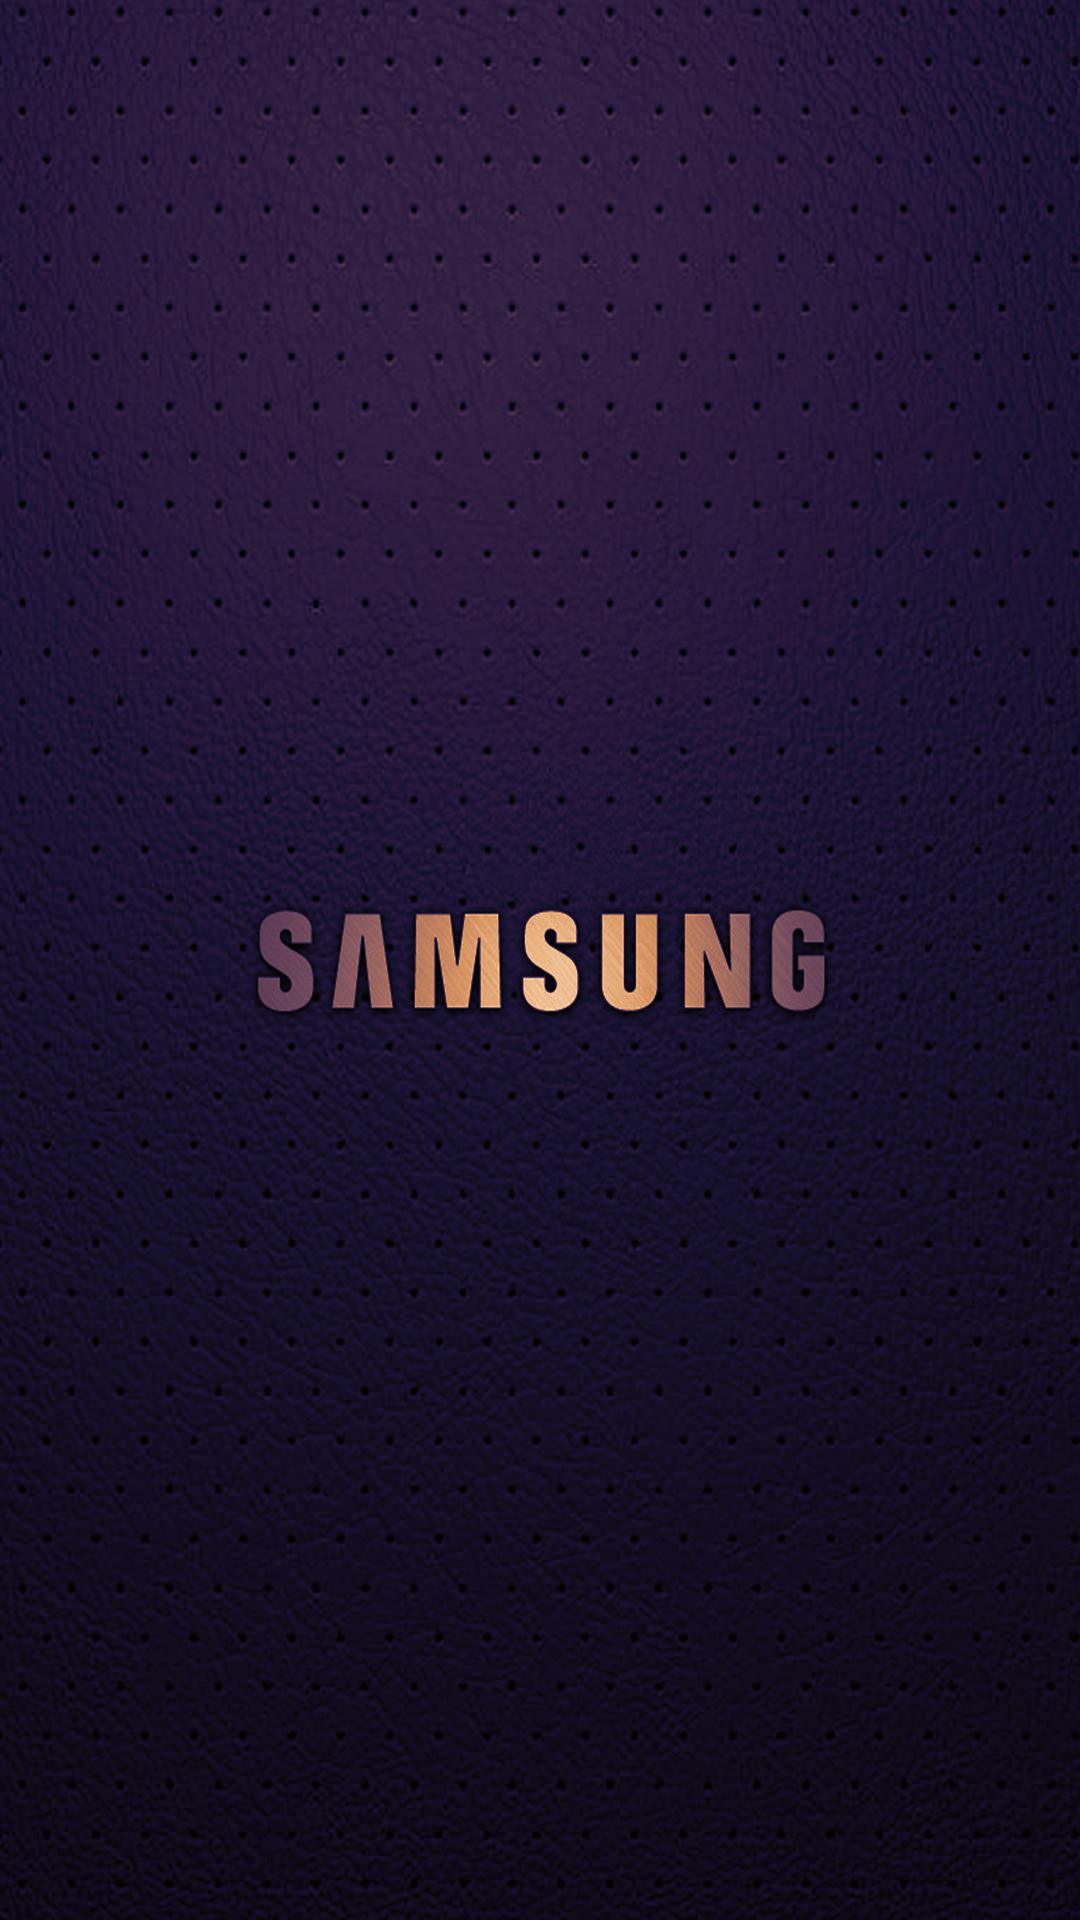 SAMSUNG Logo Wallpaper.sc SmartPhone